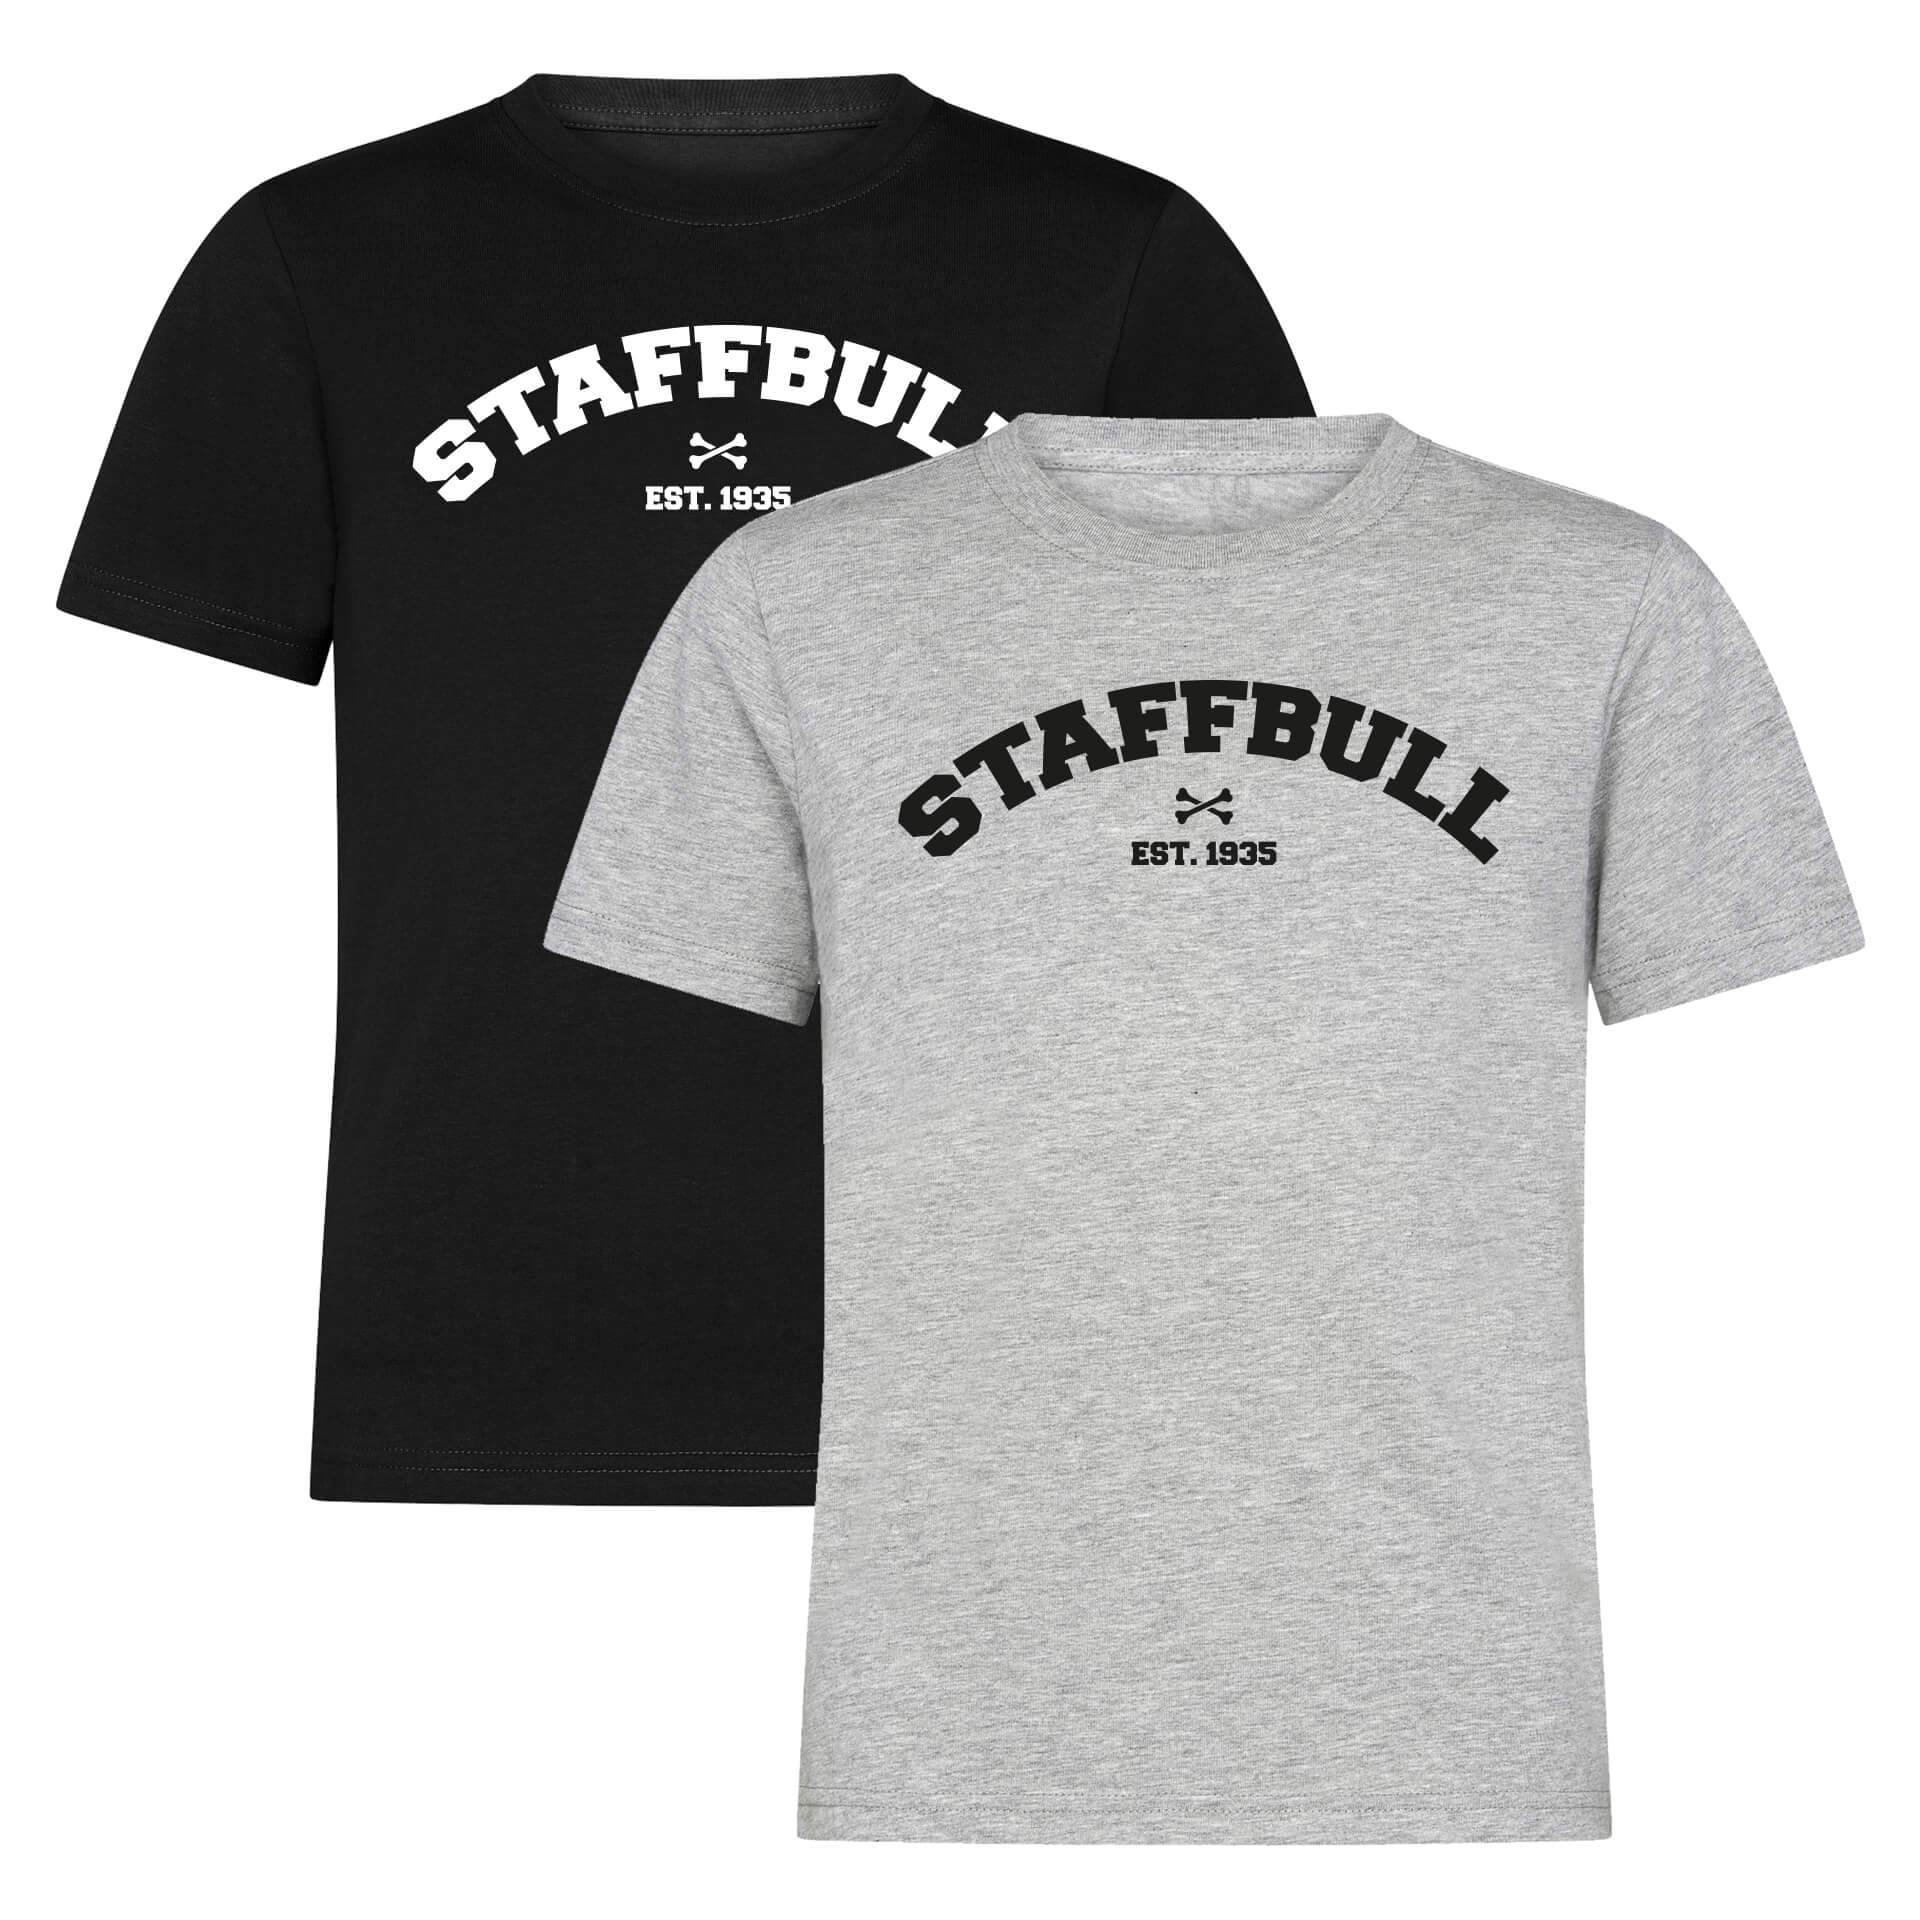 Staffbull T-Shirt EST